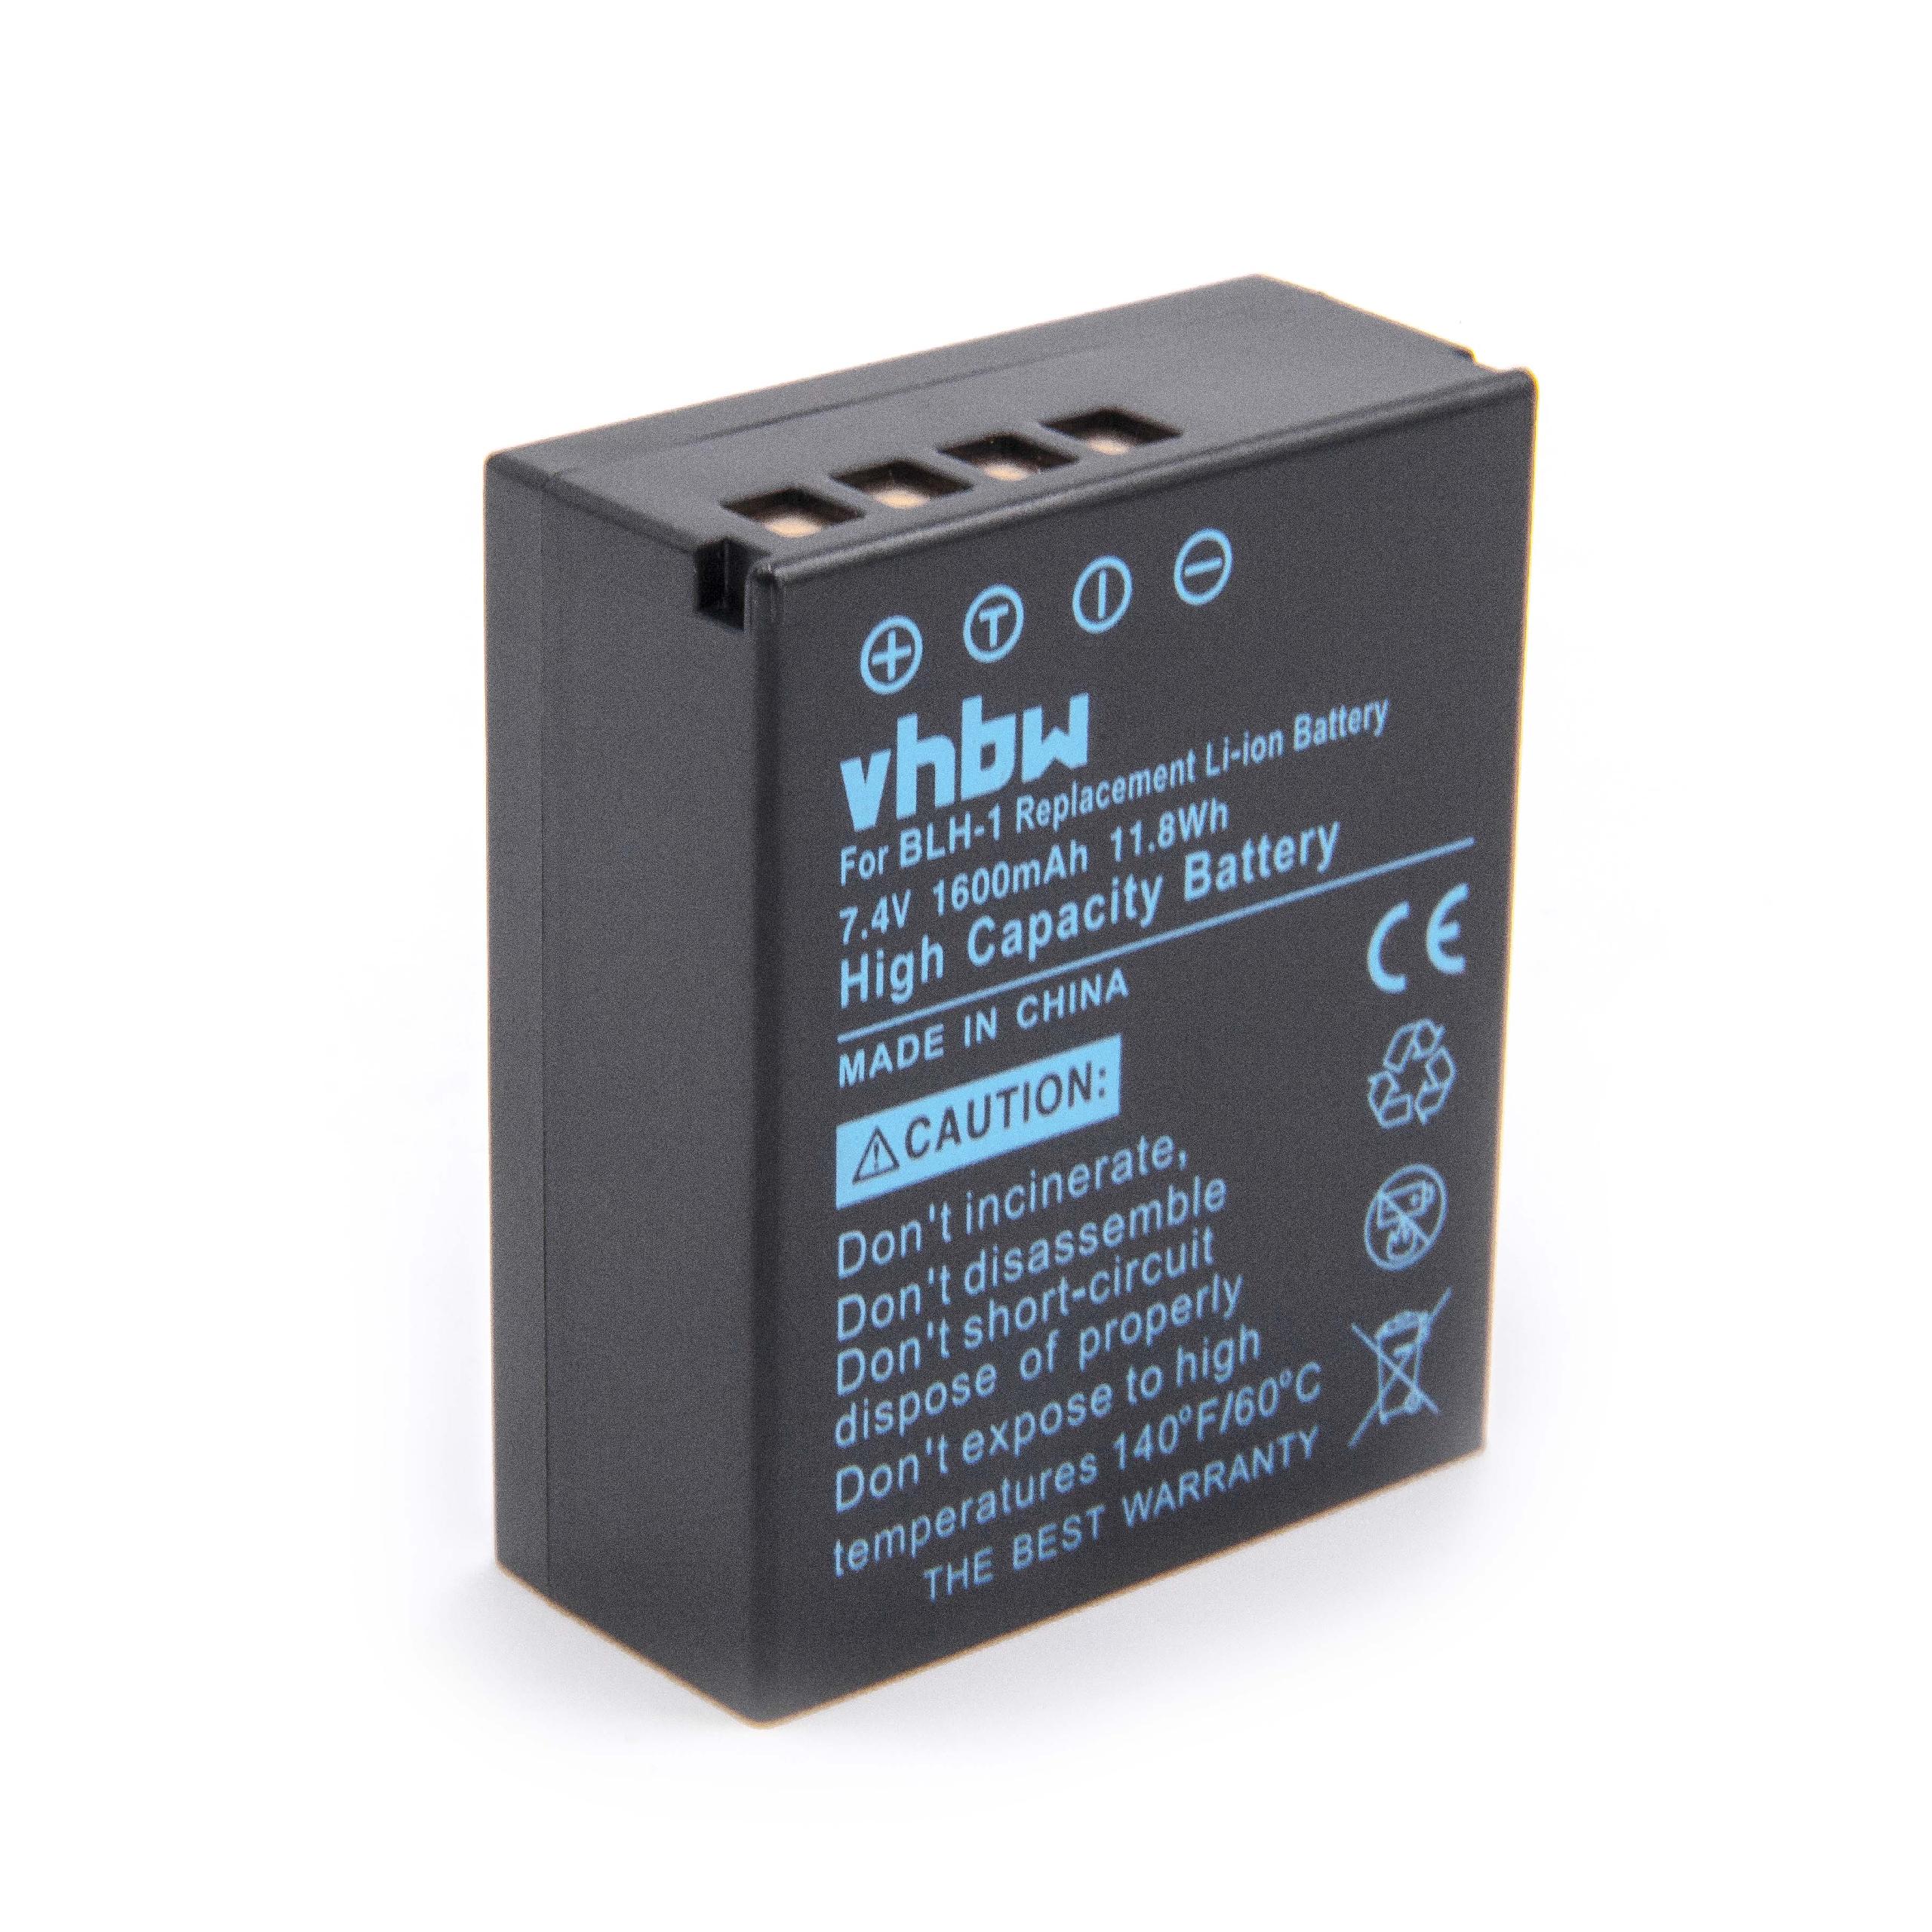 Batería reemplaza Olympus BLH-1 para cámara Olympus - 1600 mAh 7,4 V Li-Ion